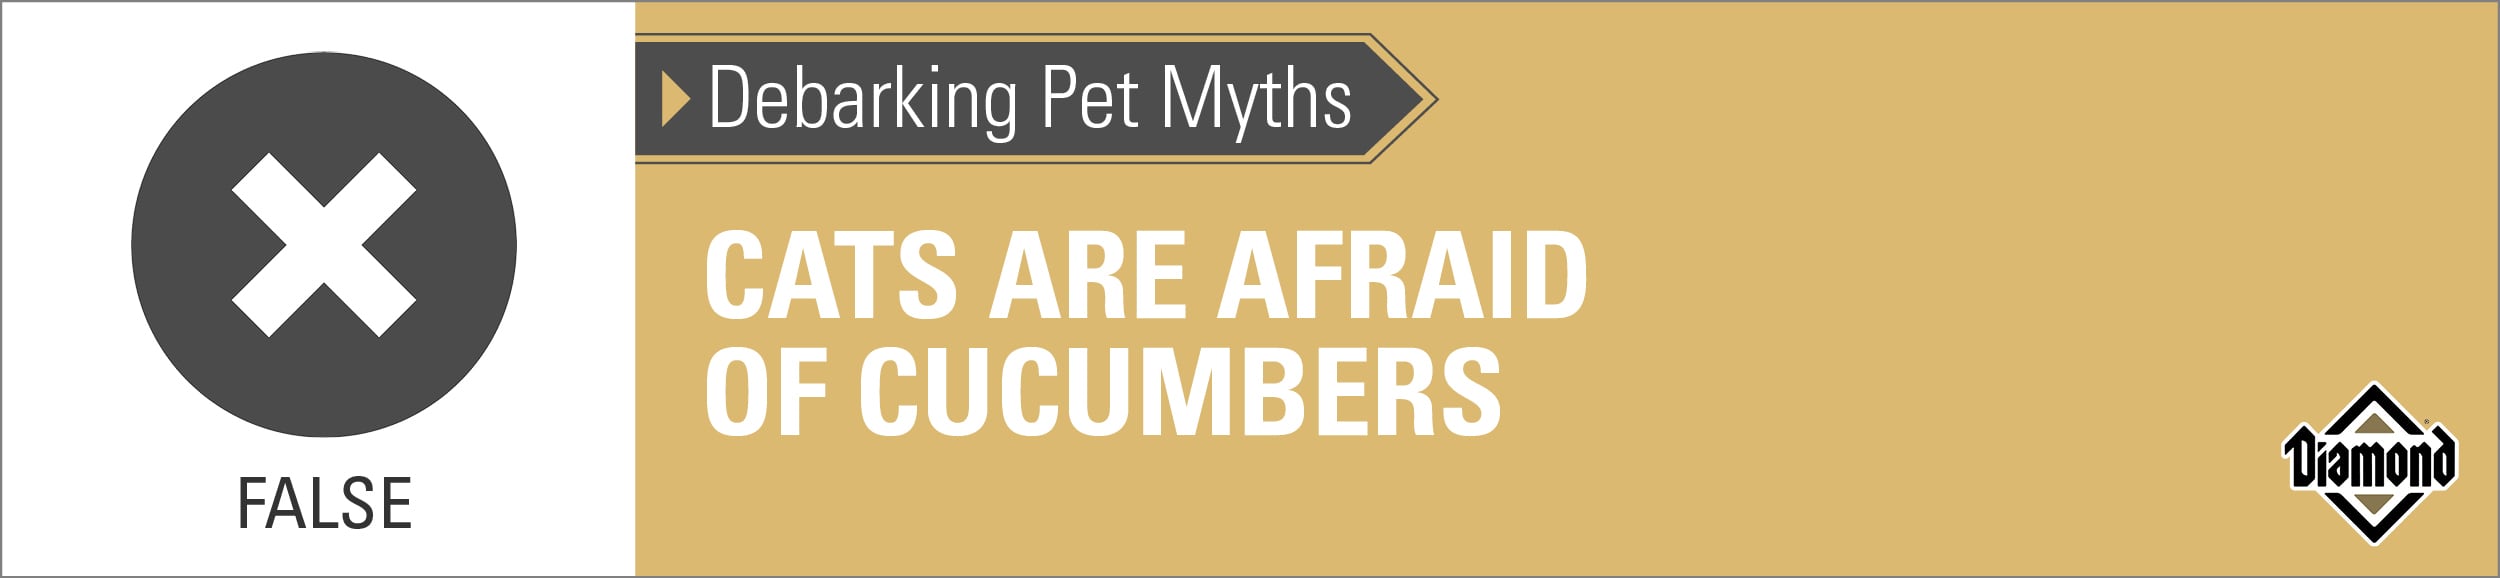 Cats are not afraid of cucumbers mythometer | Diamond Pet Foods